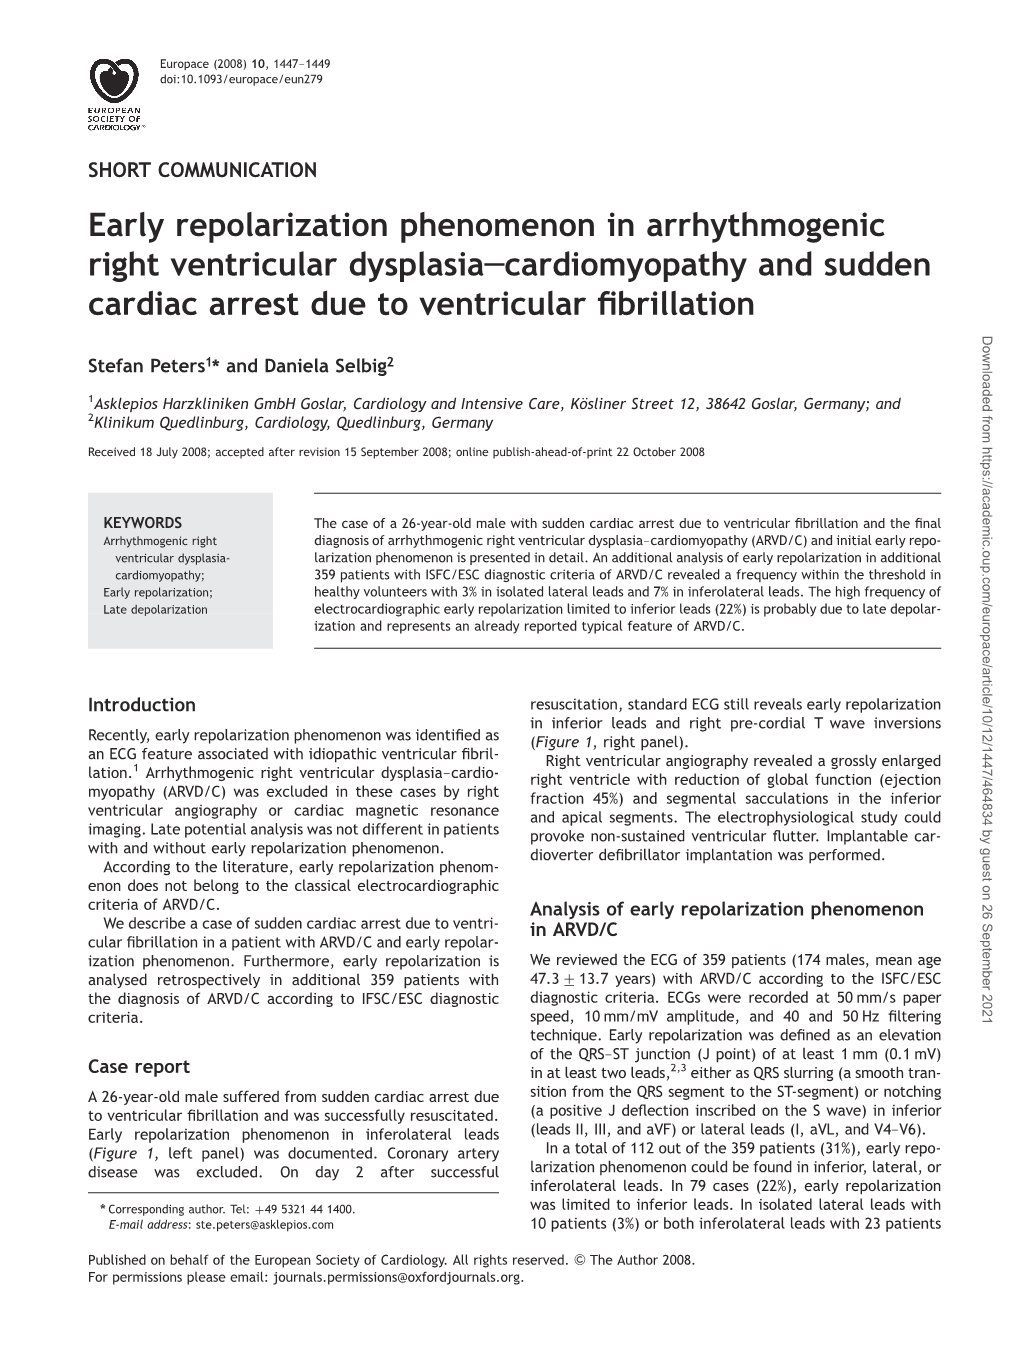 Early Repolarization Phenomenon in Arrhythmogenic Right Ventricular